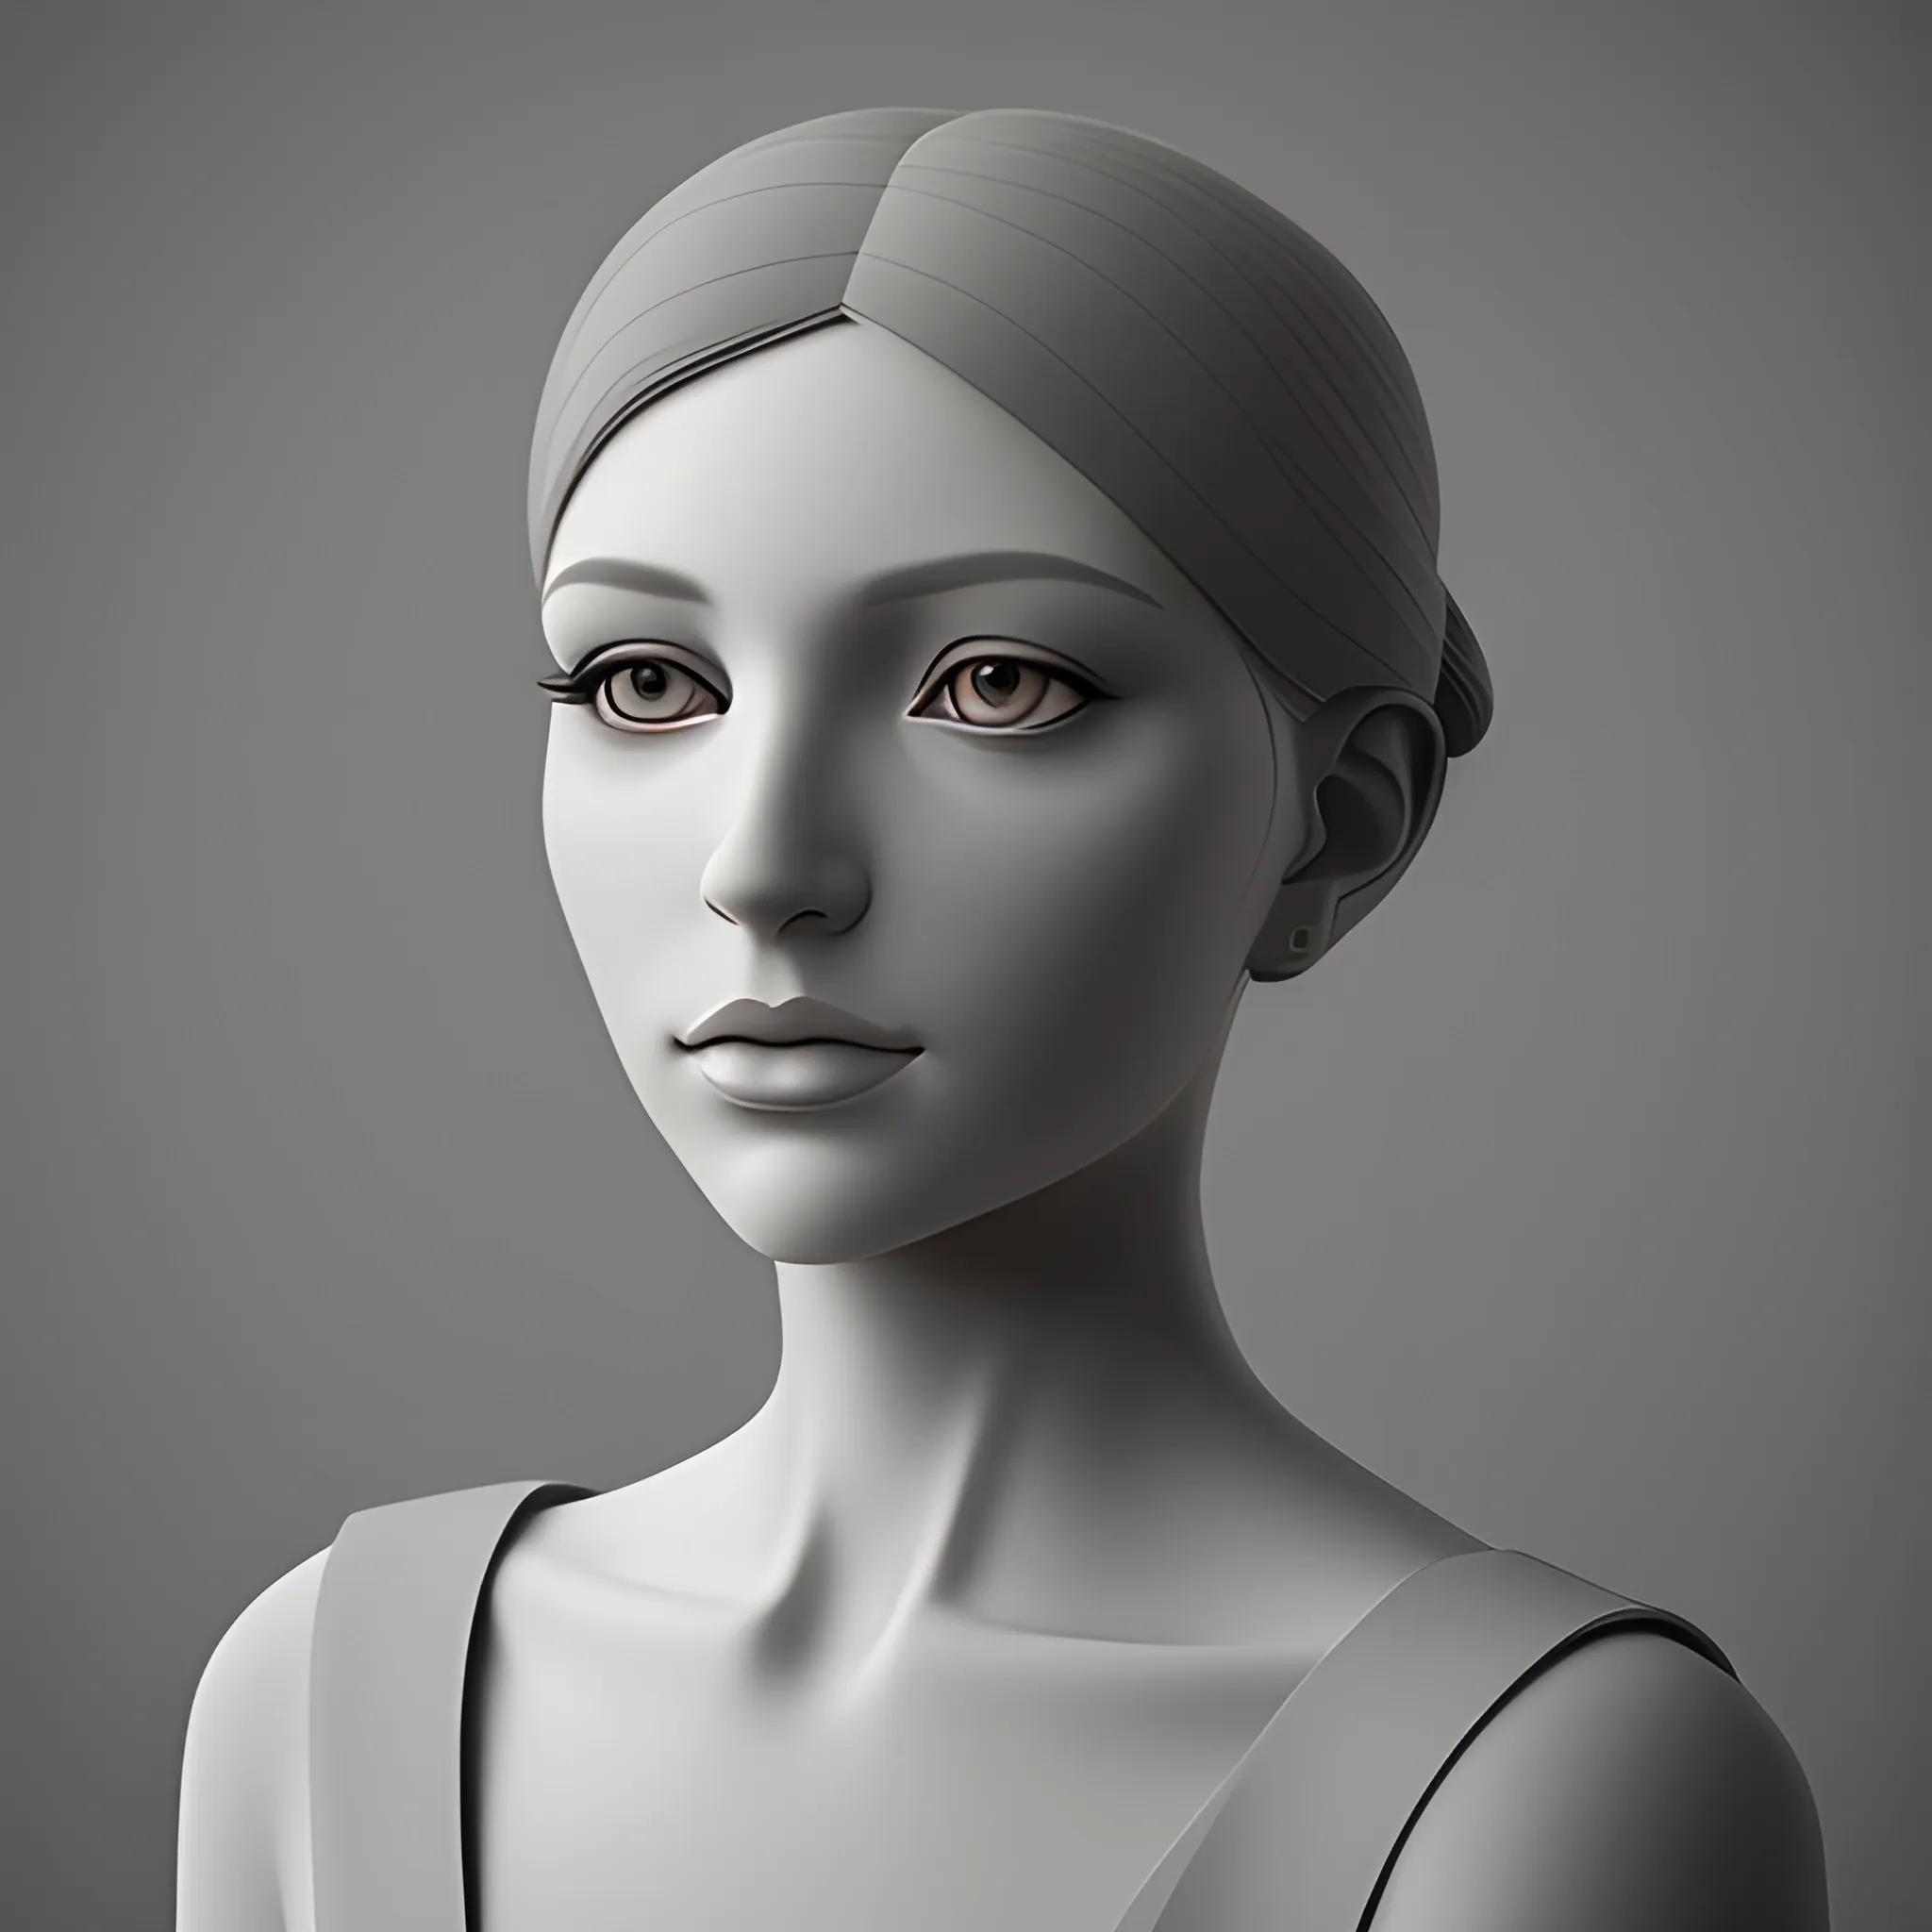 Portrait of beautiful woman, gray tones, solemn and elegant, professional photography, 3D